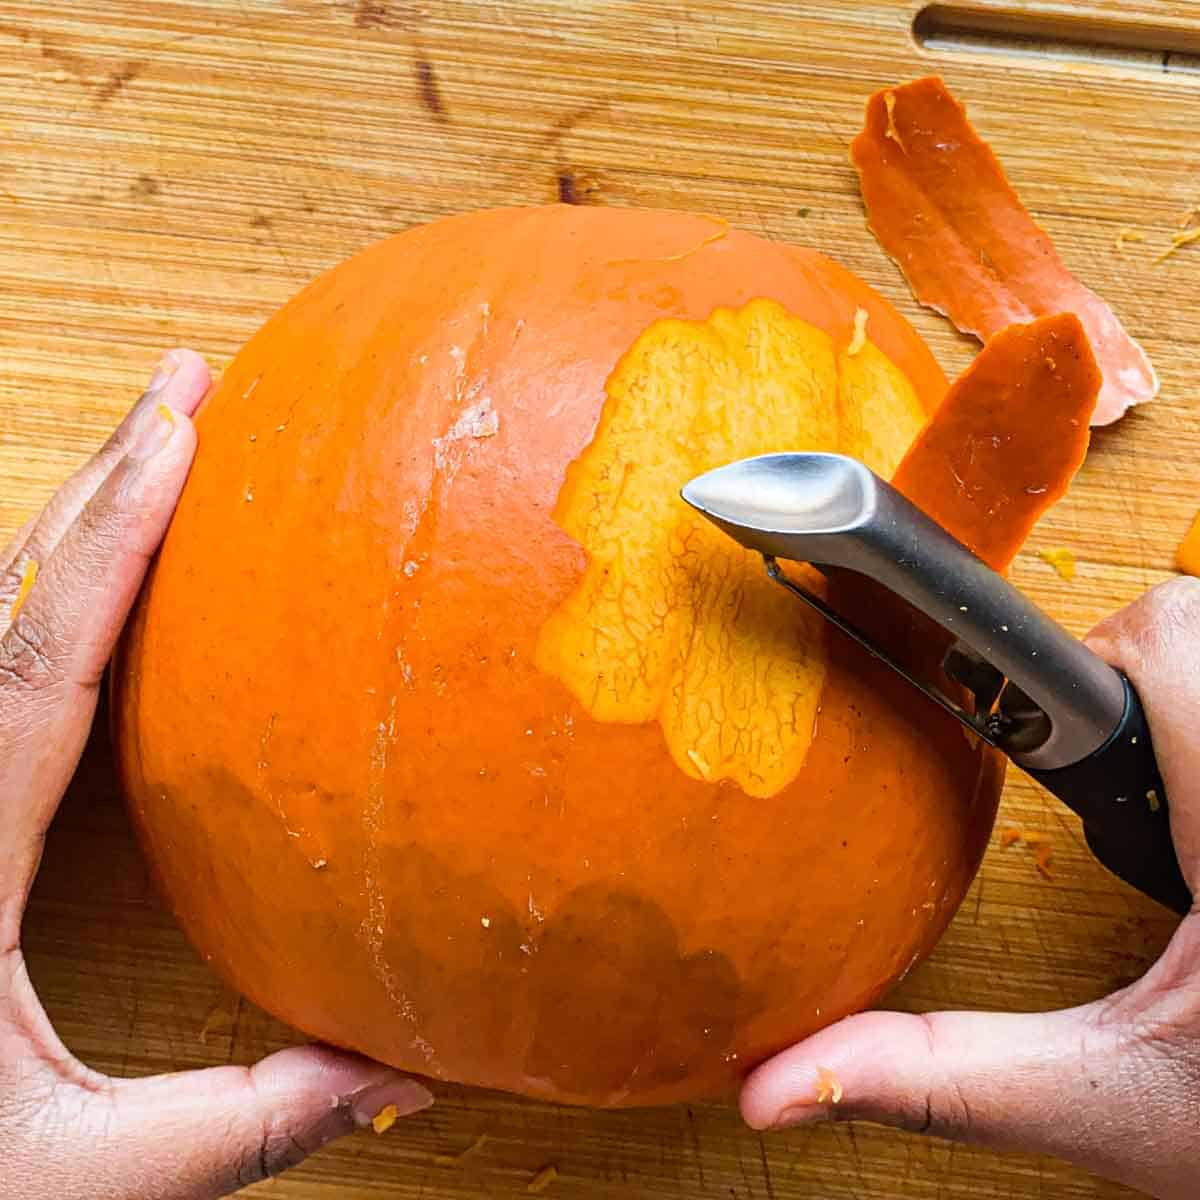 Removing pumpkin skin from pumpkin using vegetable peeler